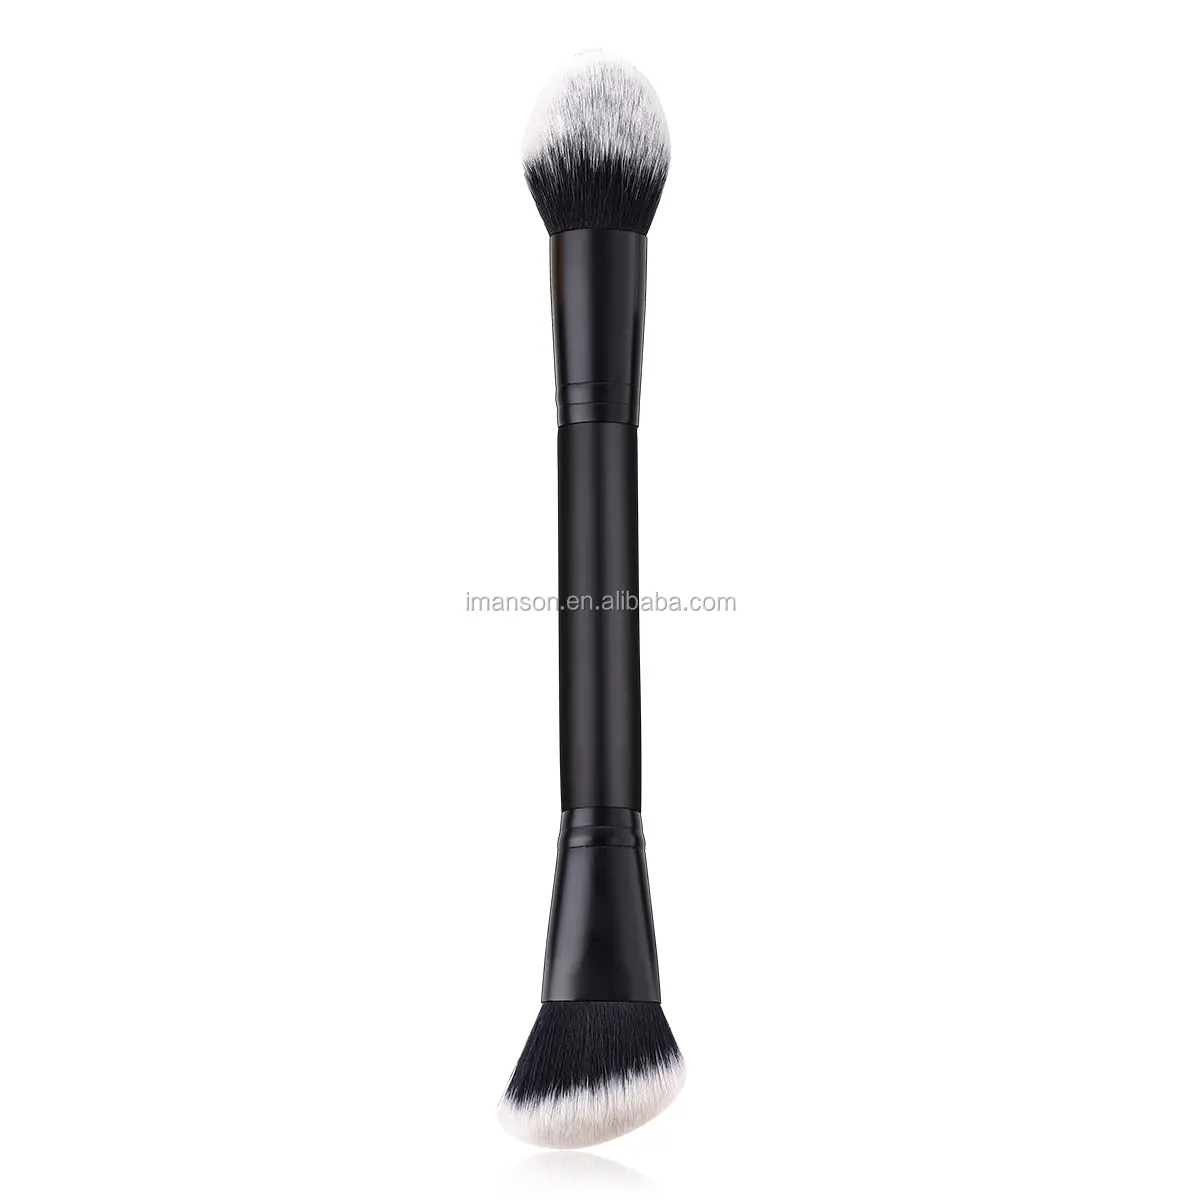 Private Label Stylish Powder Blusher Brush Black Color Double Head Single Makeup Brush